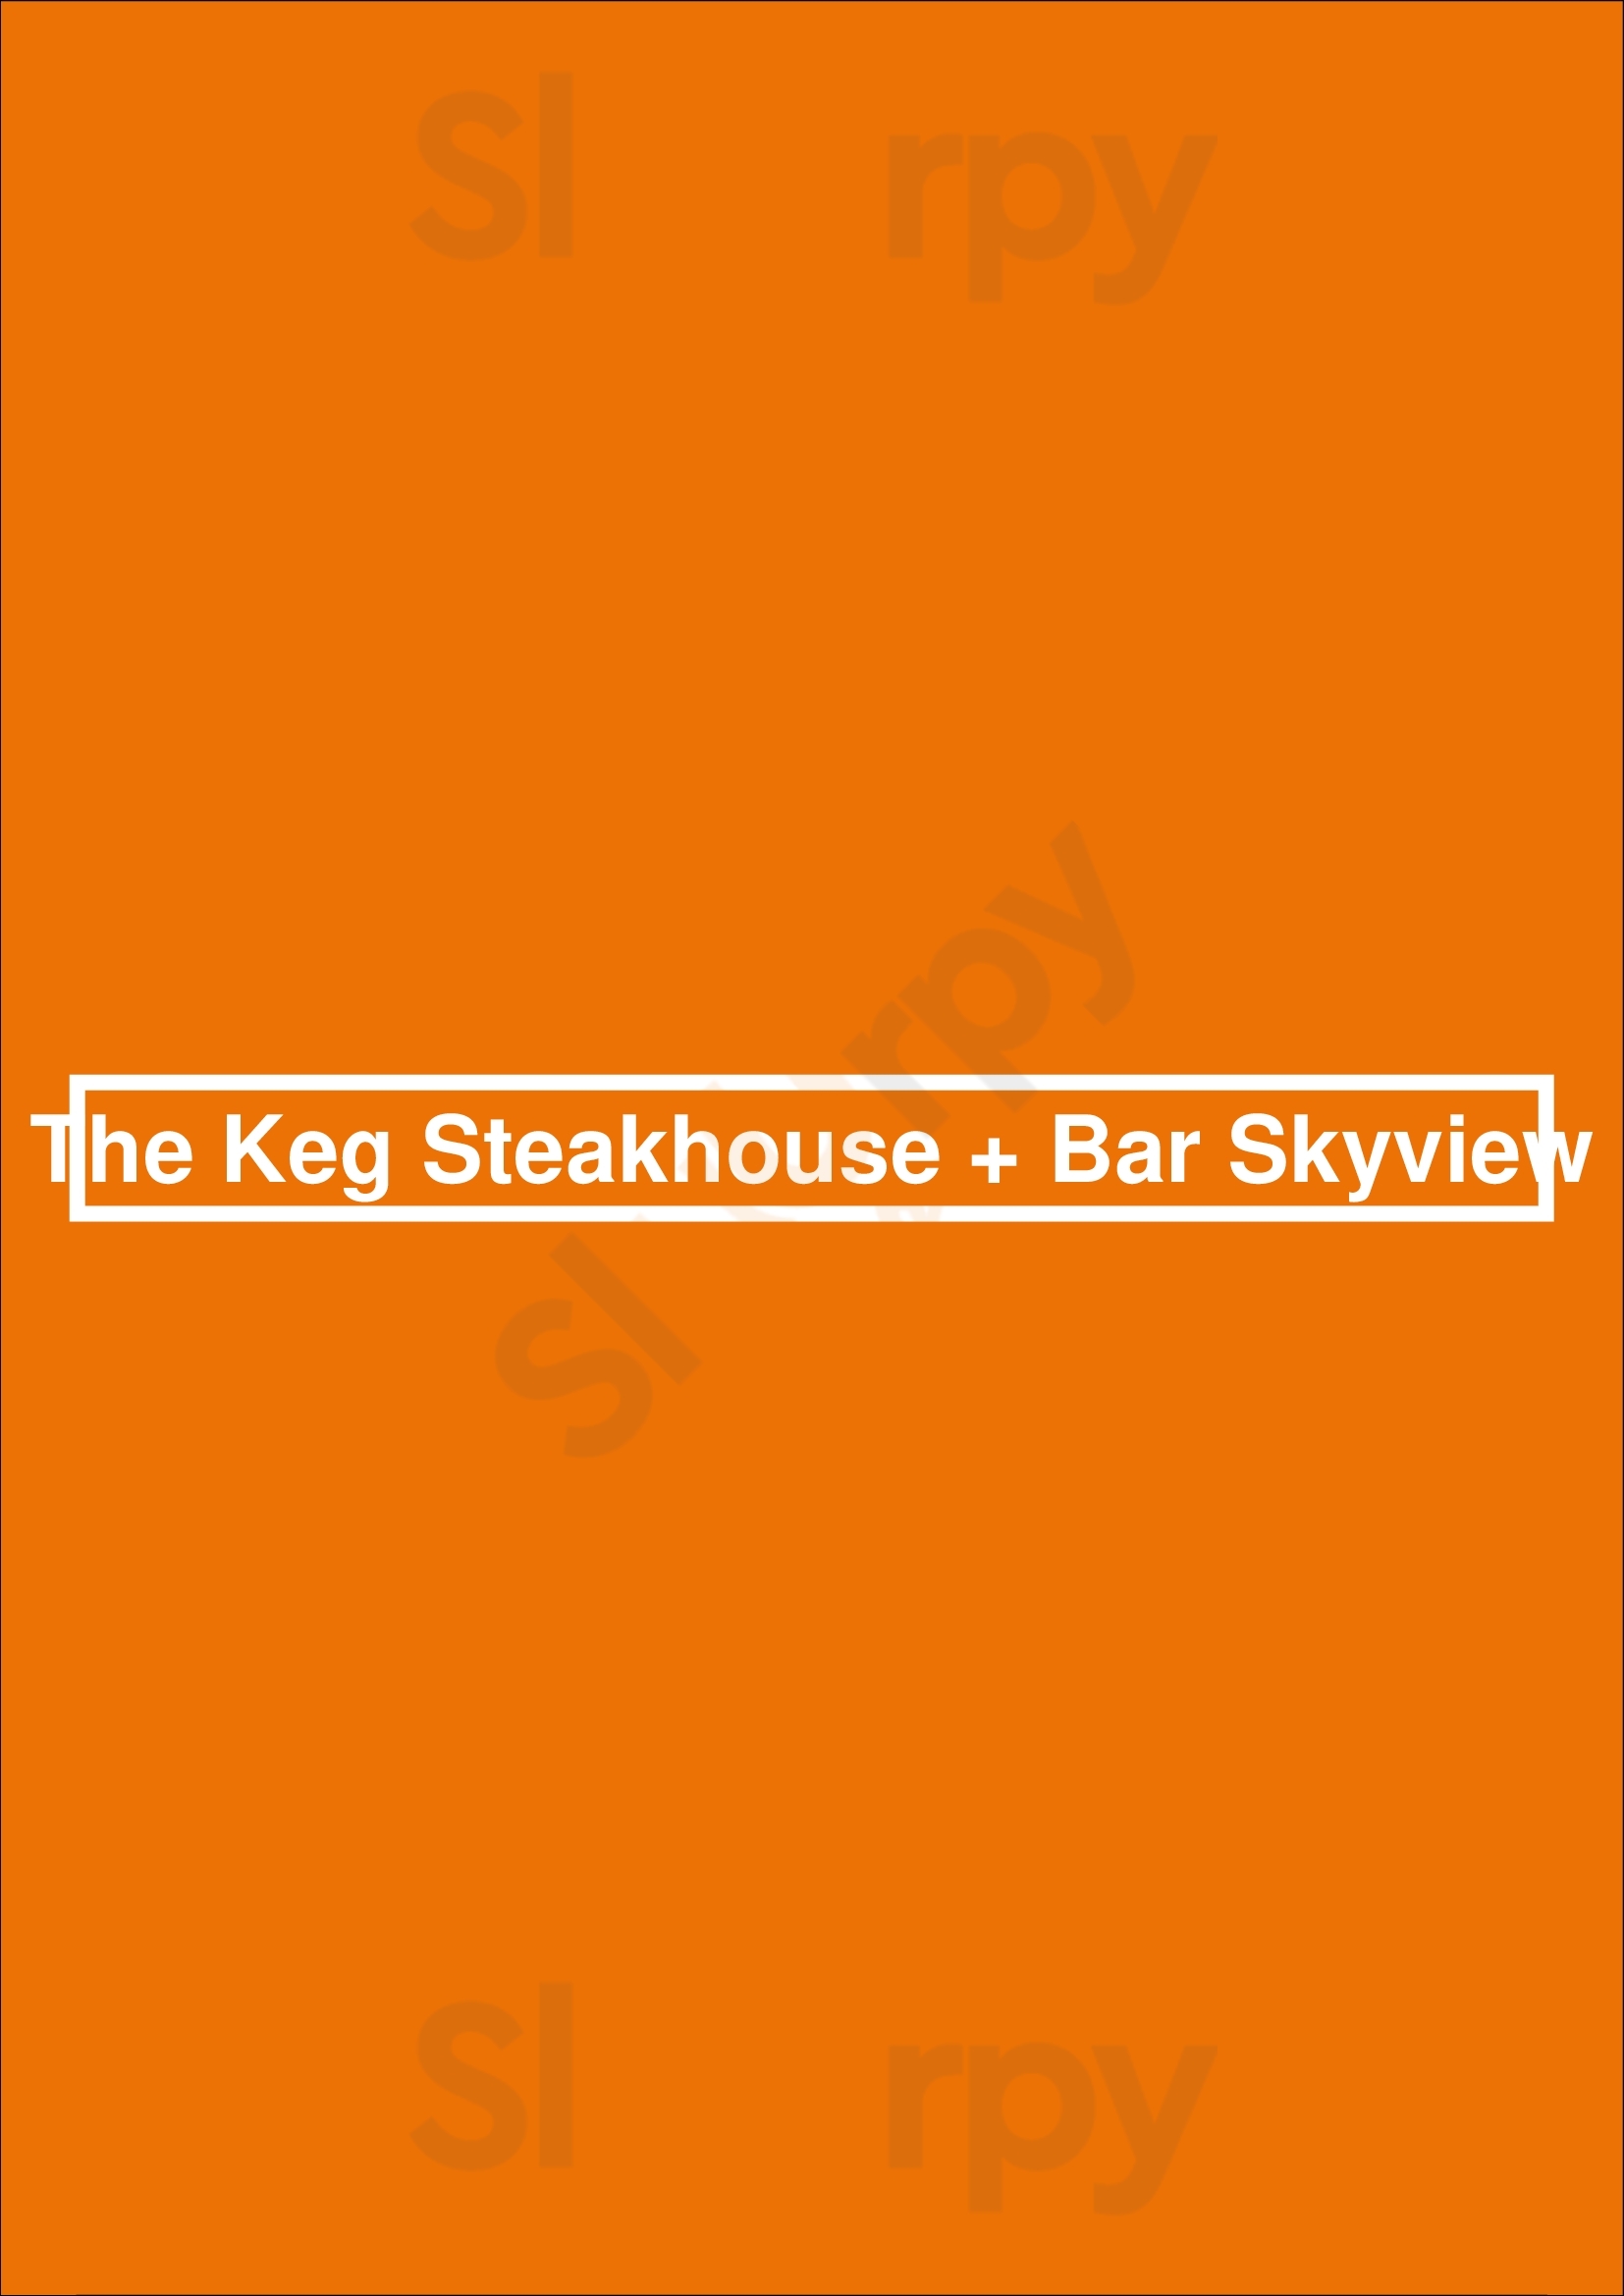 The Keg Steakhouse + Bar - Skyview Edmonton Menu - 1